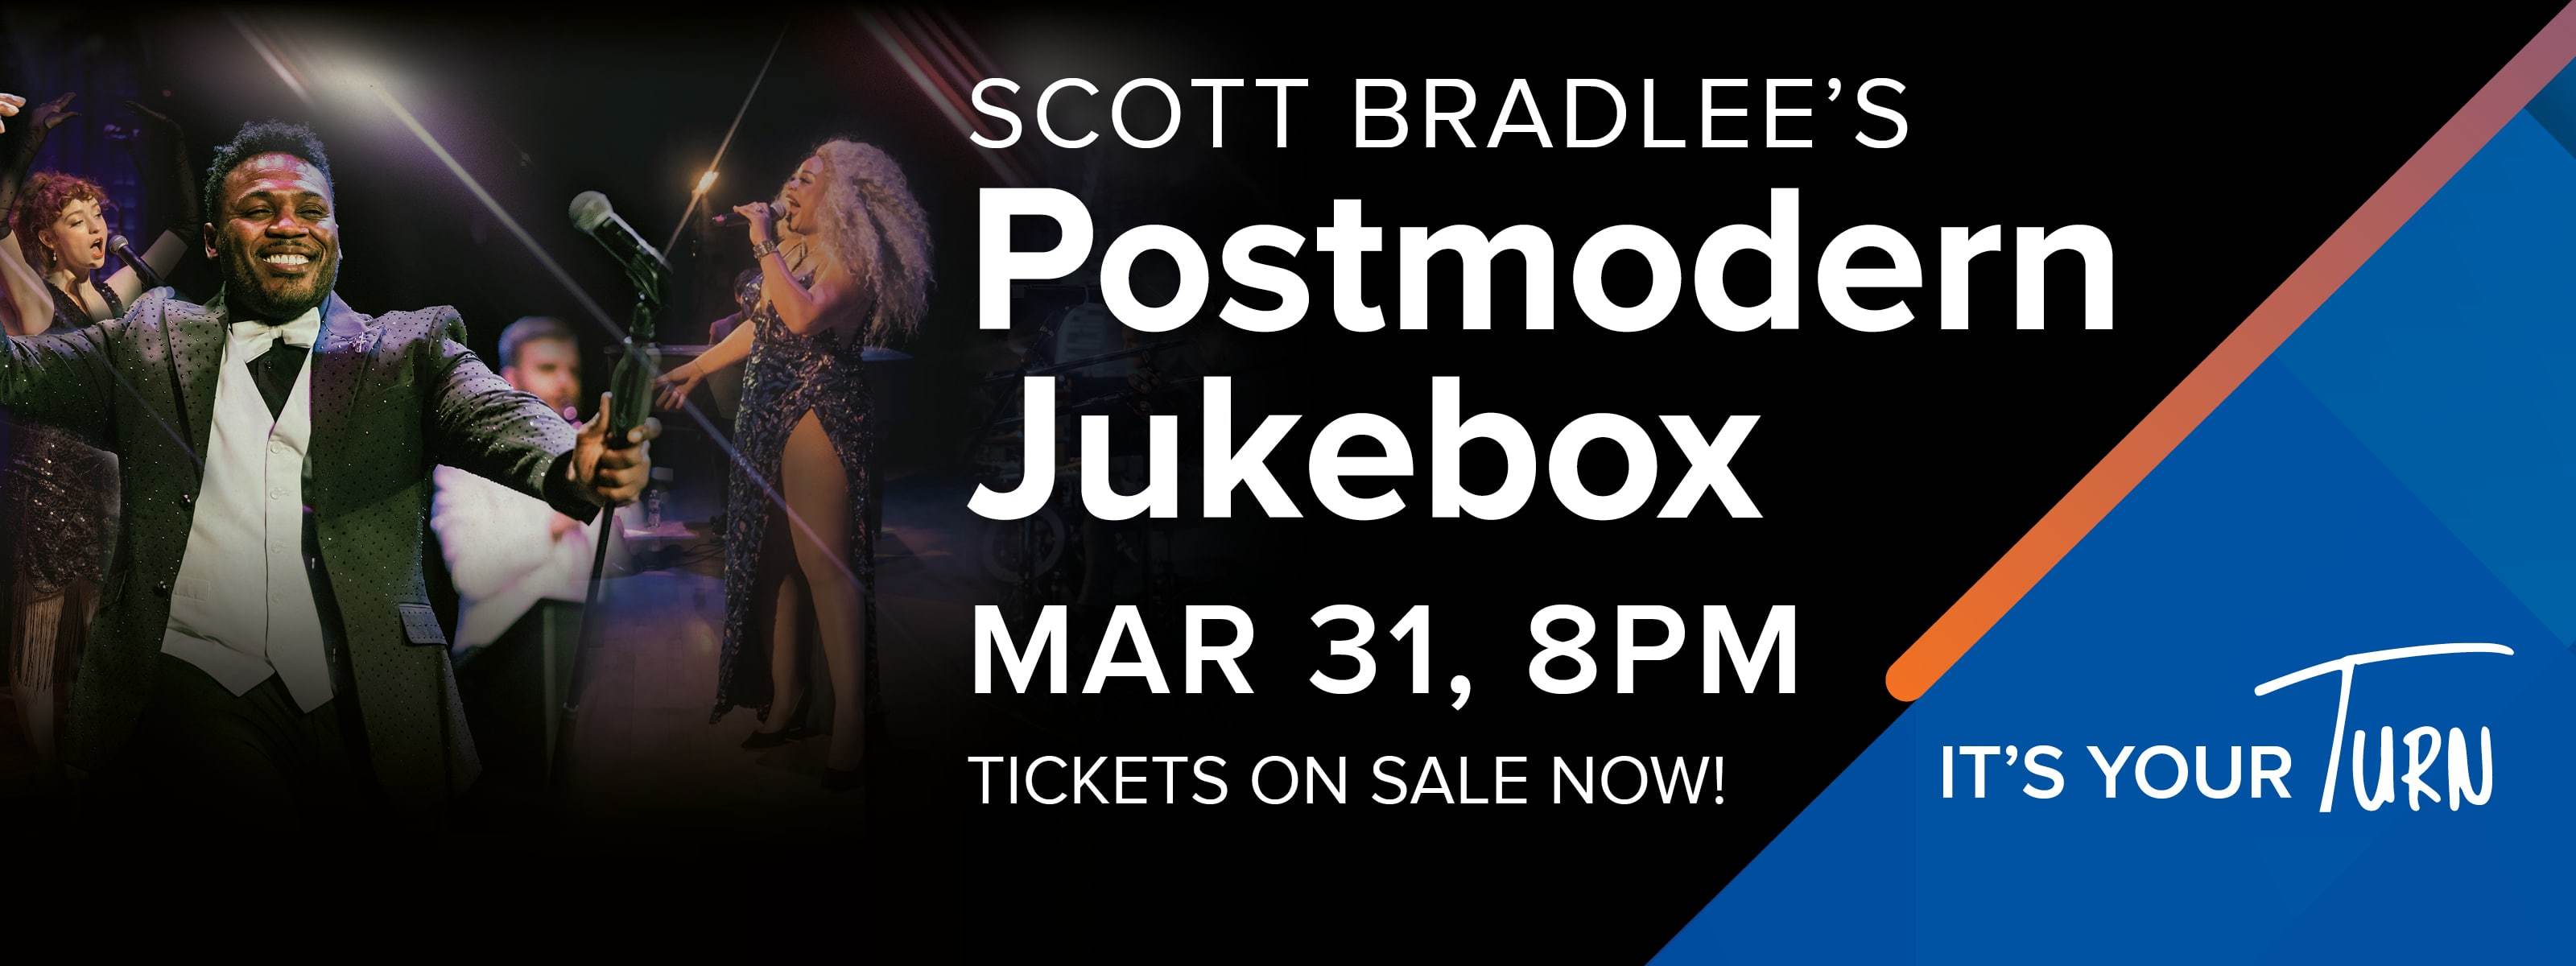 scott bradlees postmodern jukebox march 31 8pm tickets on sale now